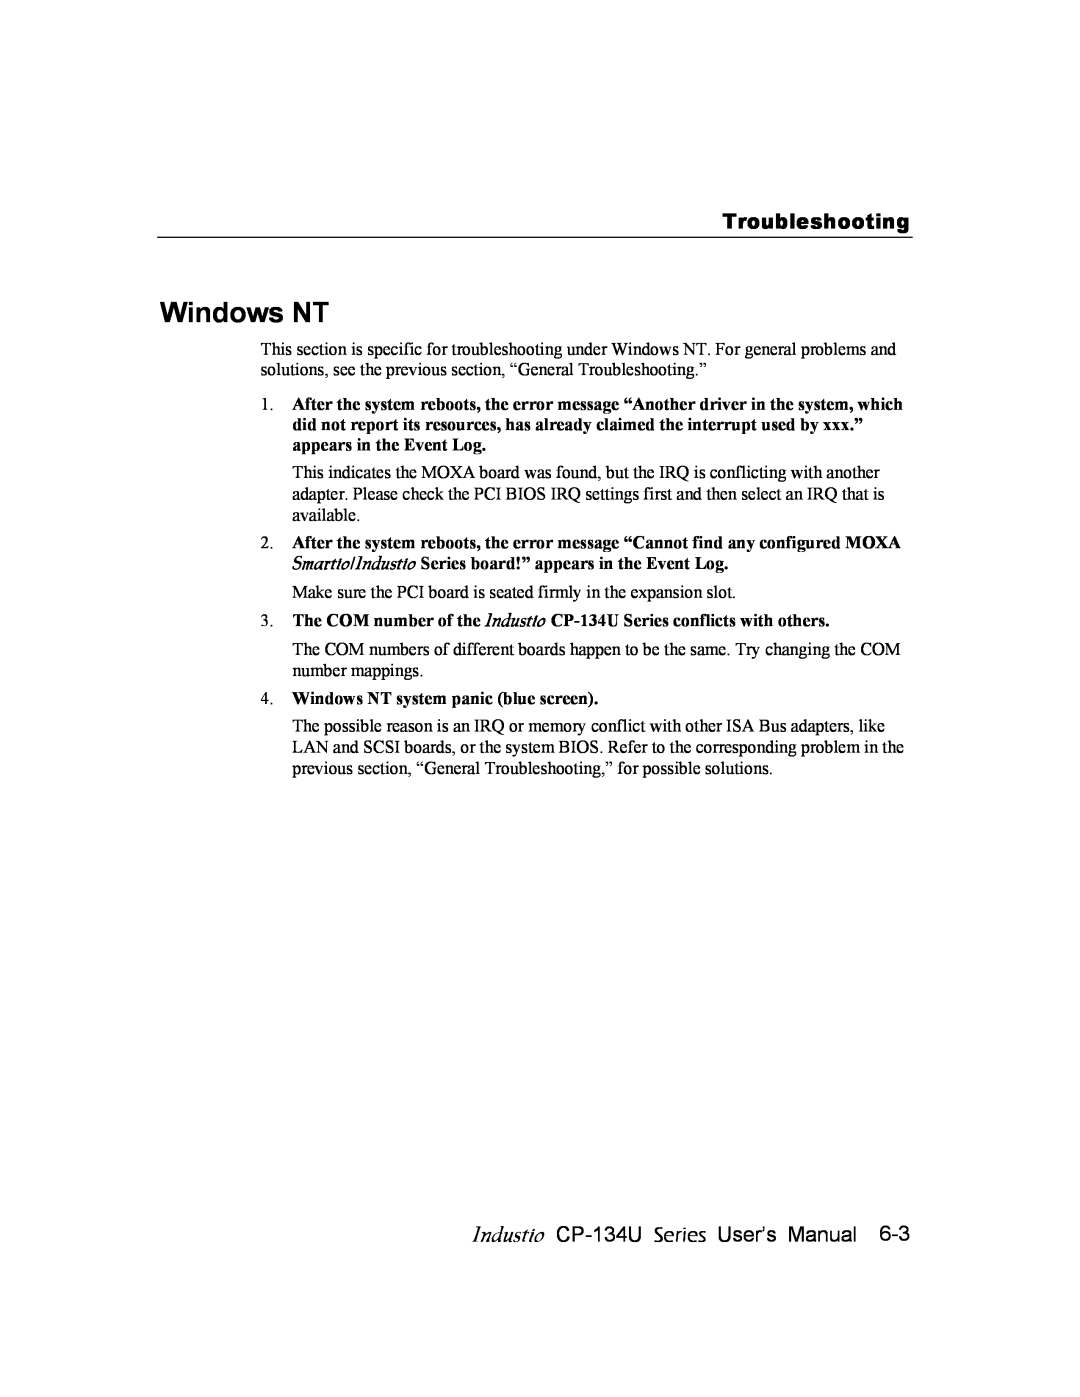 Moxa Technologies user manual Windows NT, Troubleshooting, Industio CP-134U Series User’s Manual 